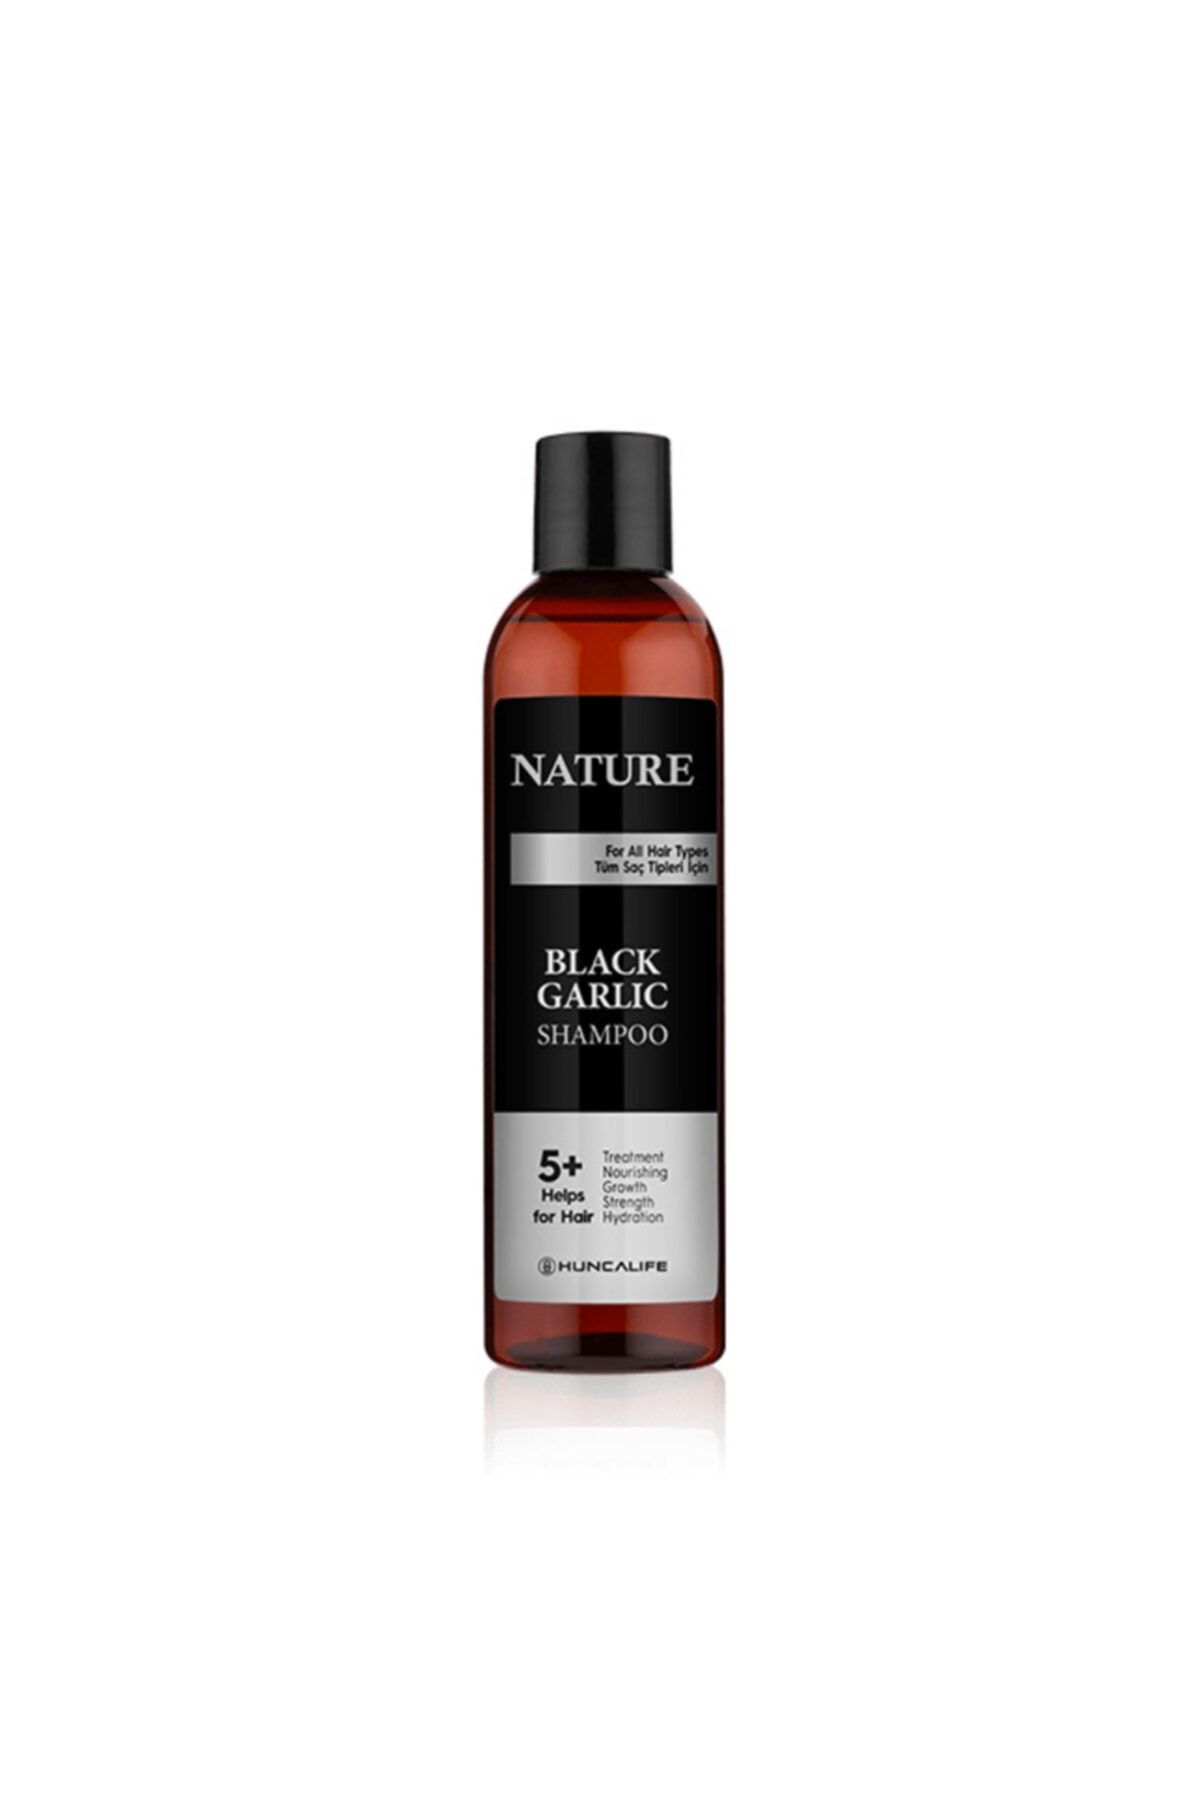 Huncalife Nature Siyah Sarımsaklı Şampuan 350 ml - Şampuan 27529